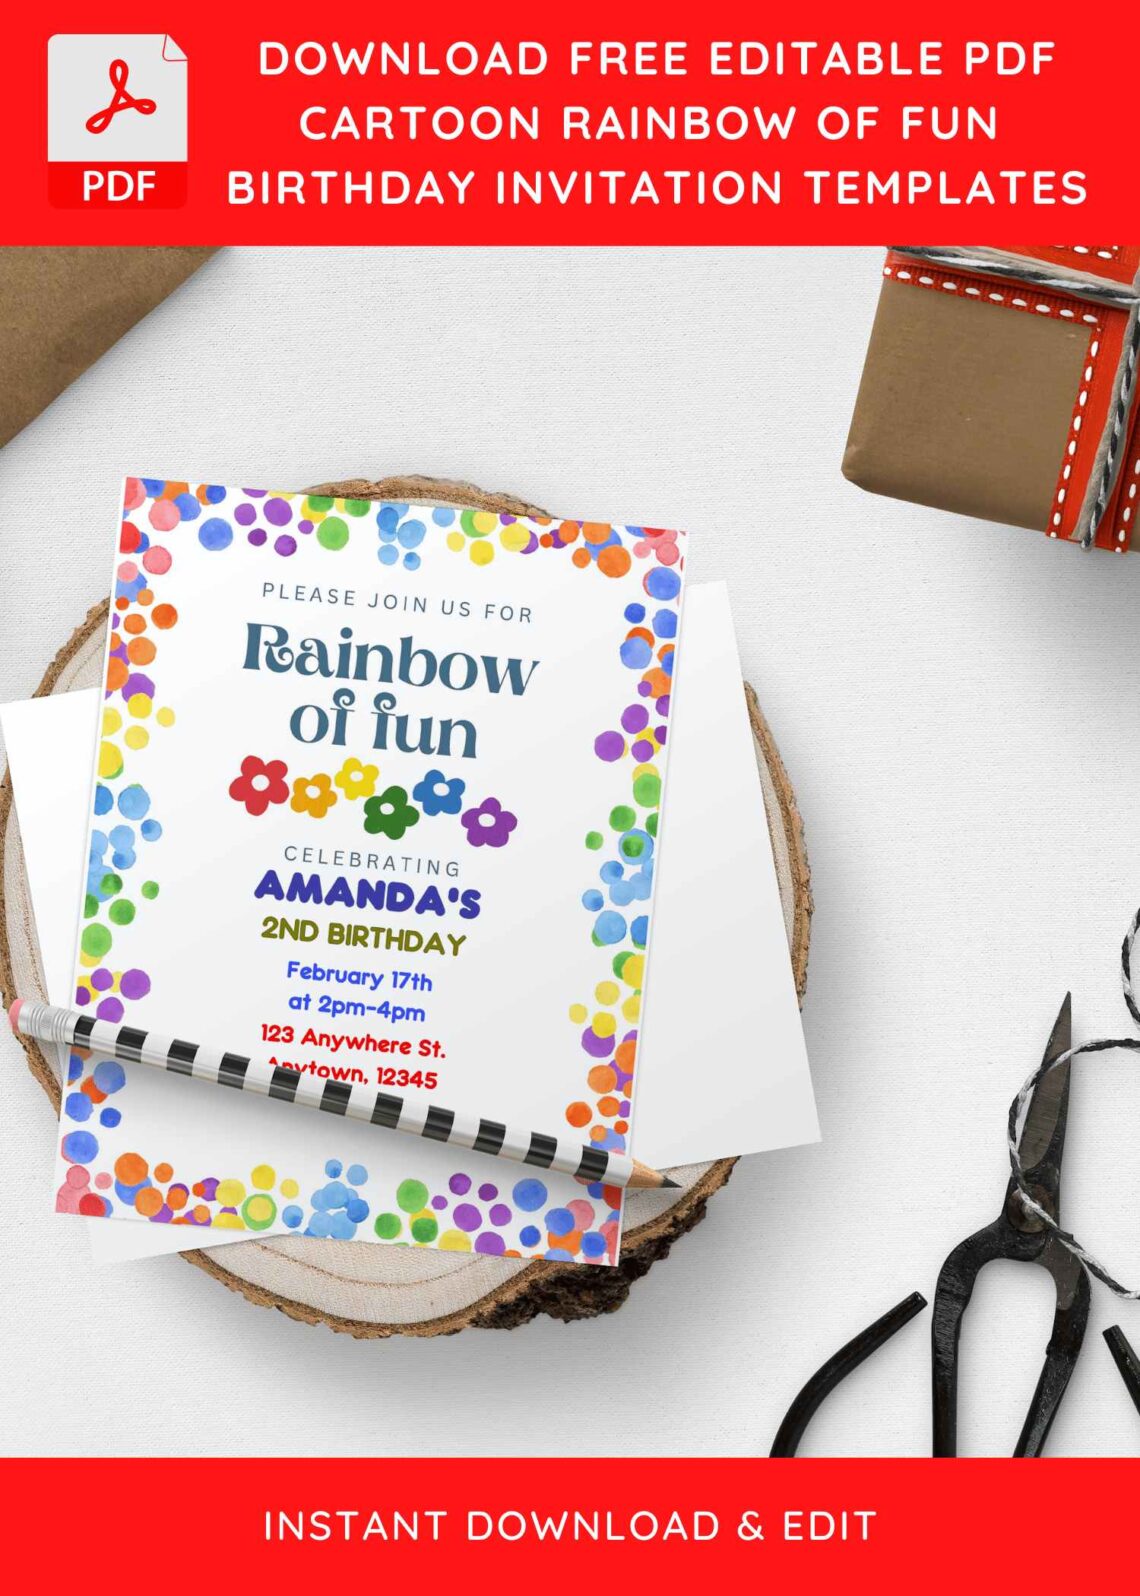 (Free Editable PDF) Colorful Rainbow Of Fun Birthday Invitation Templates